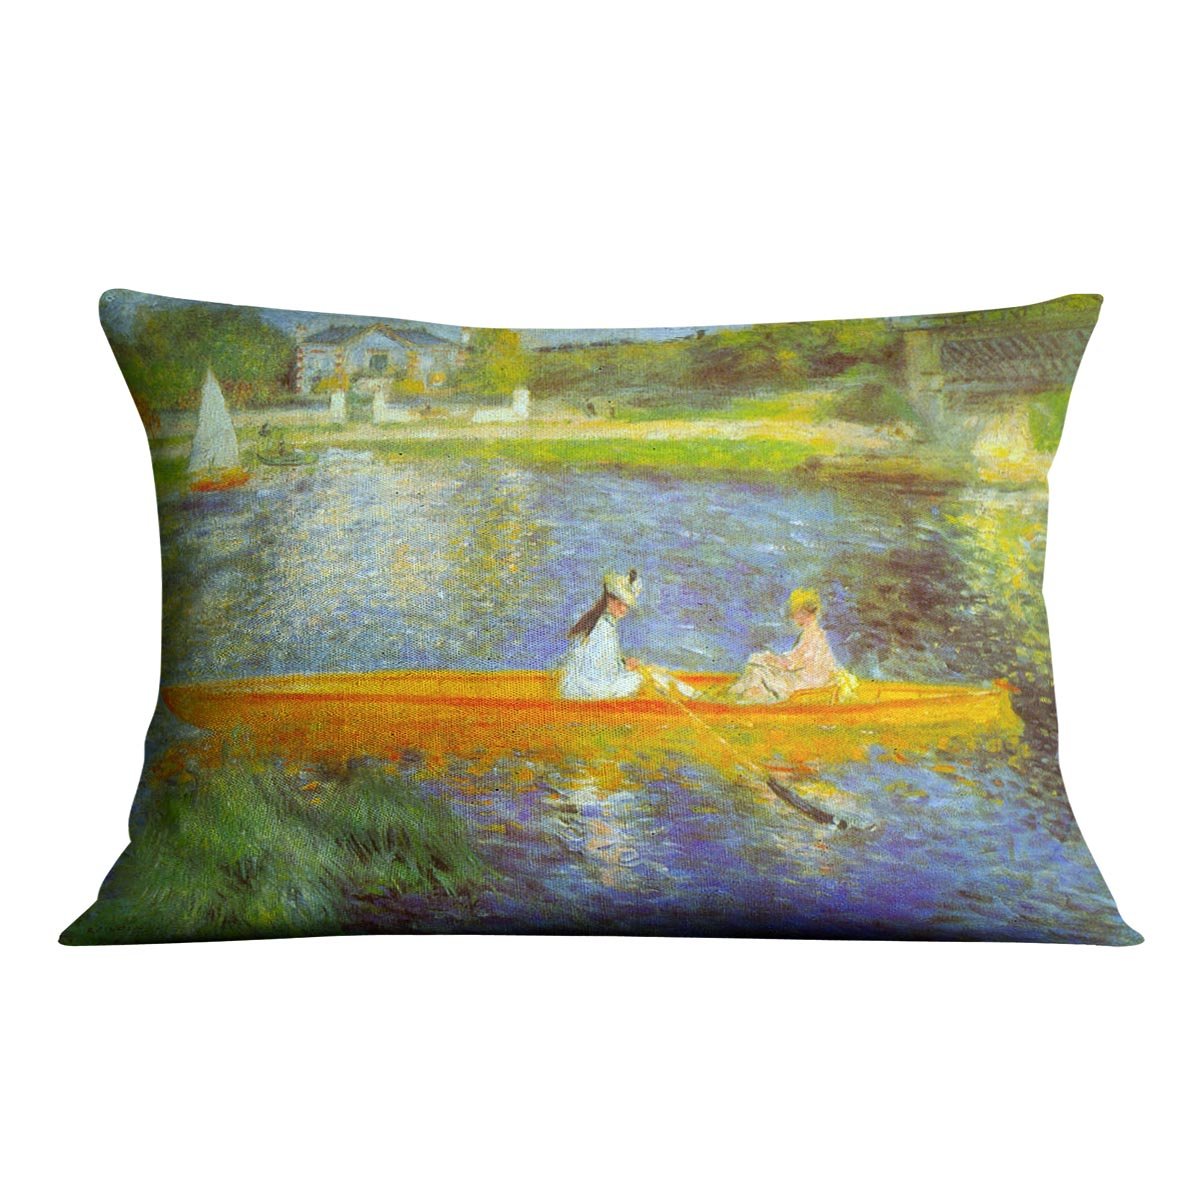 The Seine by Renoir Throw Pillow